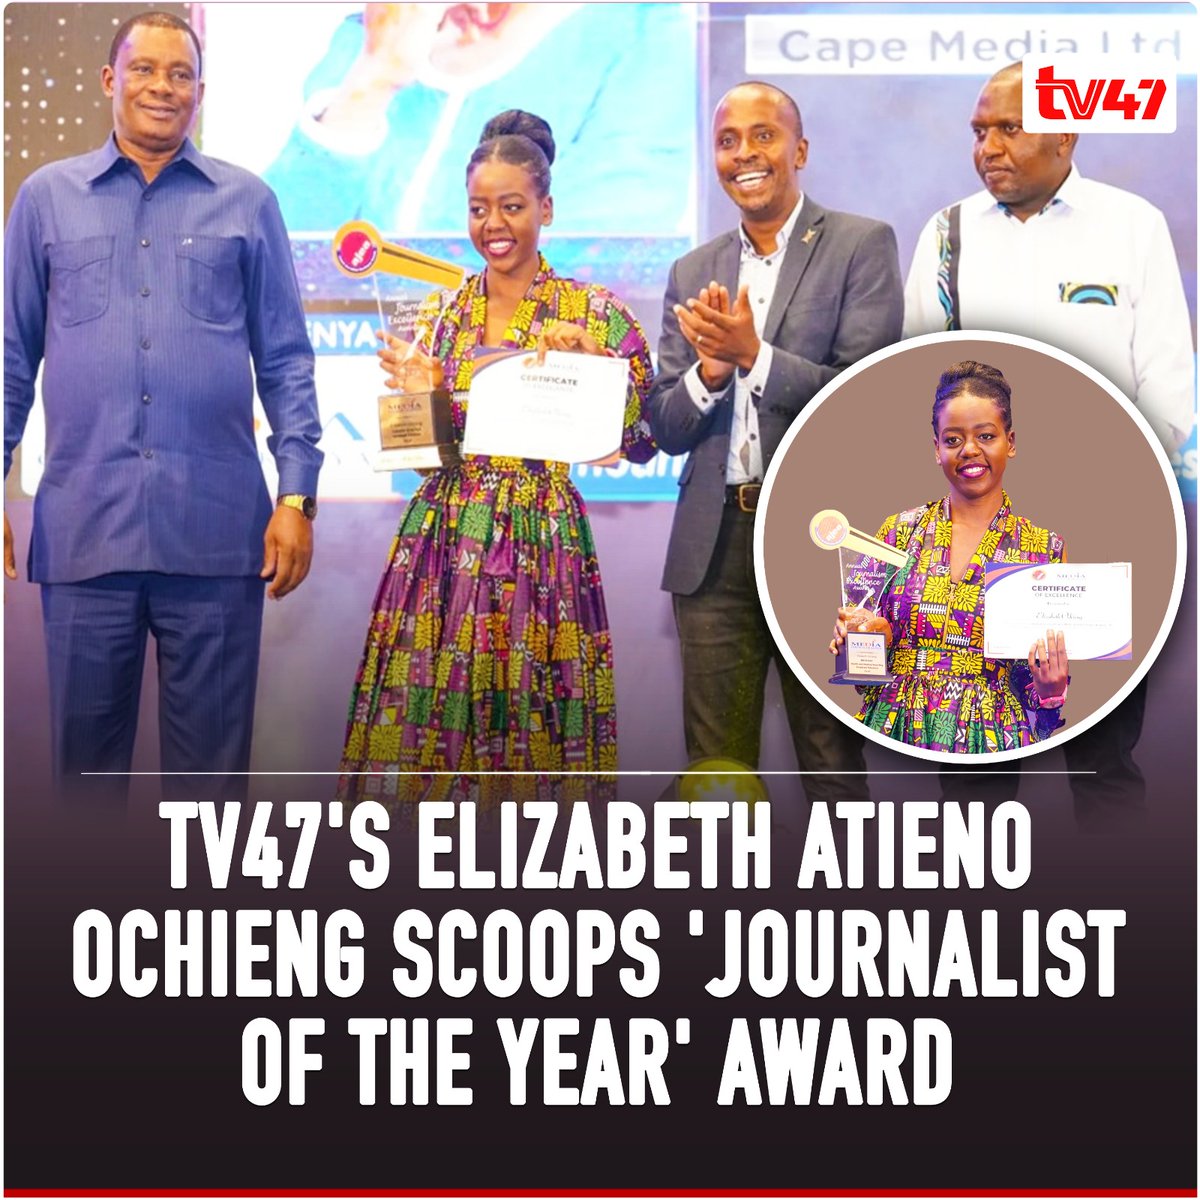 TV47's Elizabeth Atieno Ochieng scoops the 'Journalist of the Year' award...